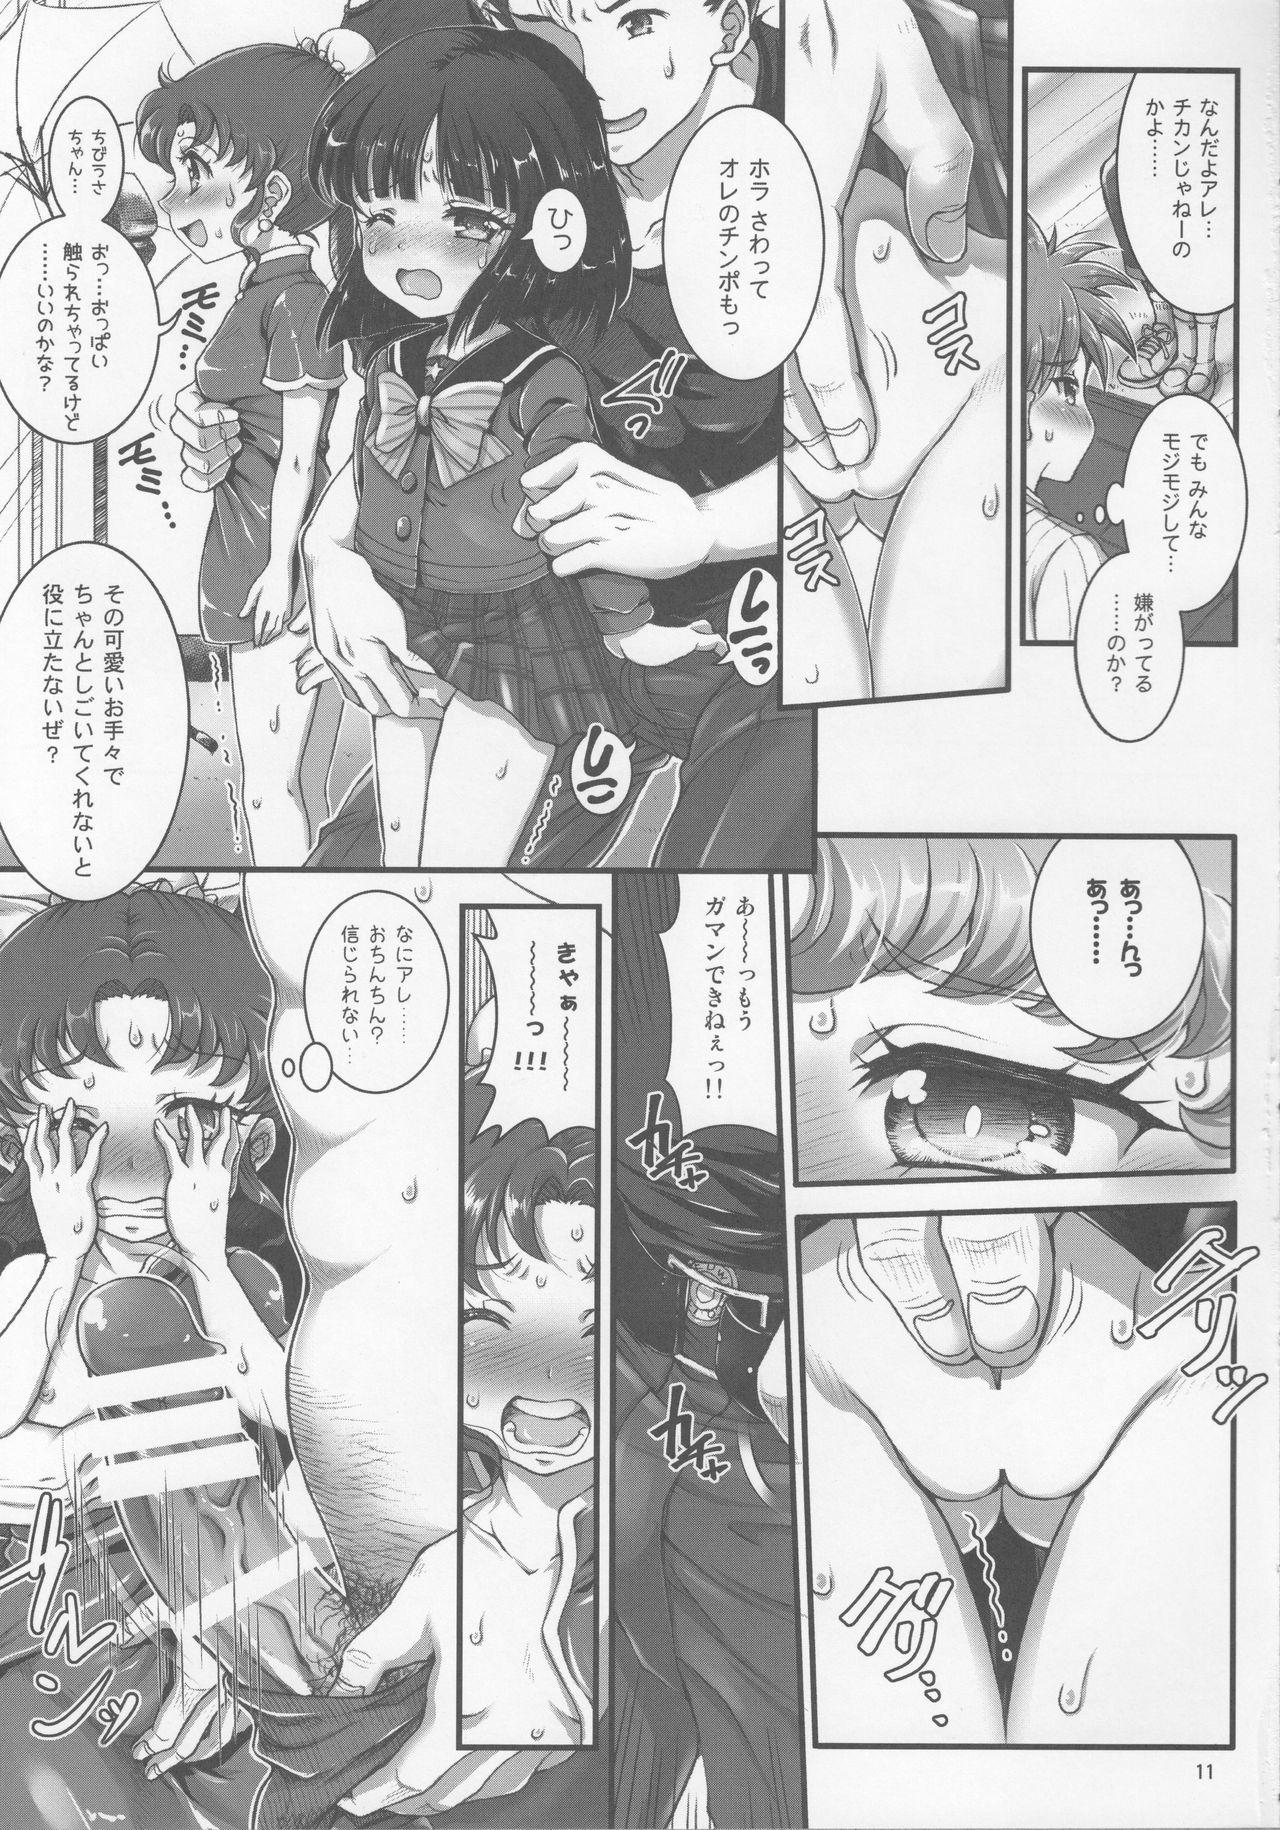 Sailor AV Kikaku 9